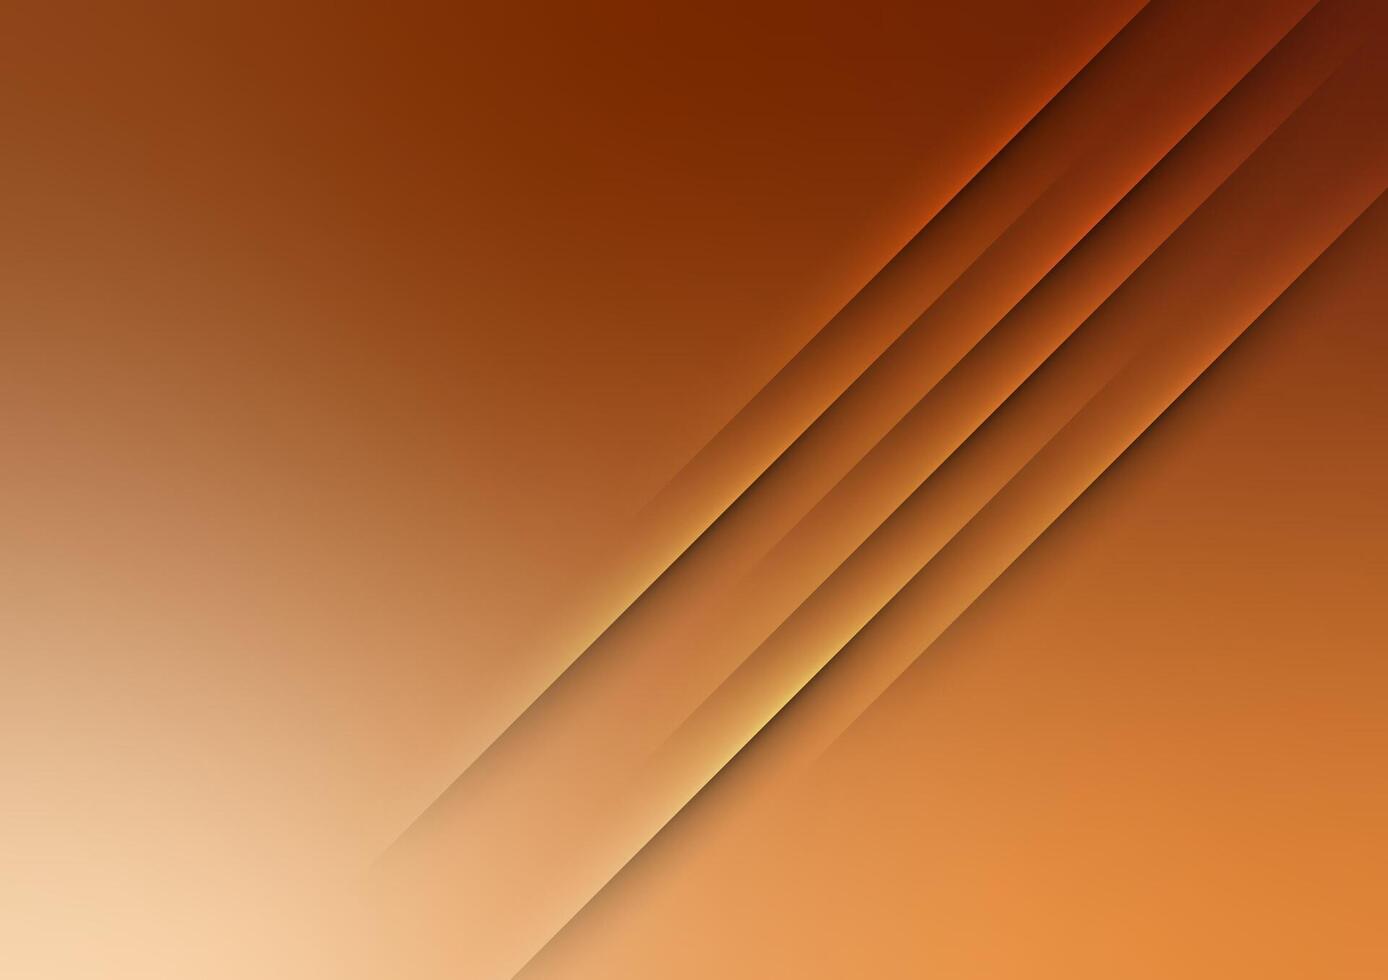 Presentation orange line abstract graphic background vector